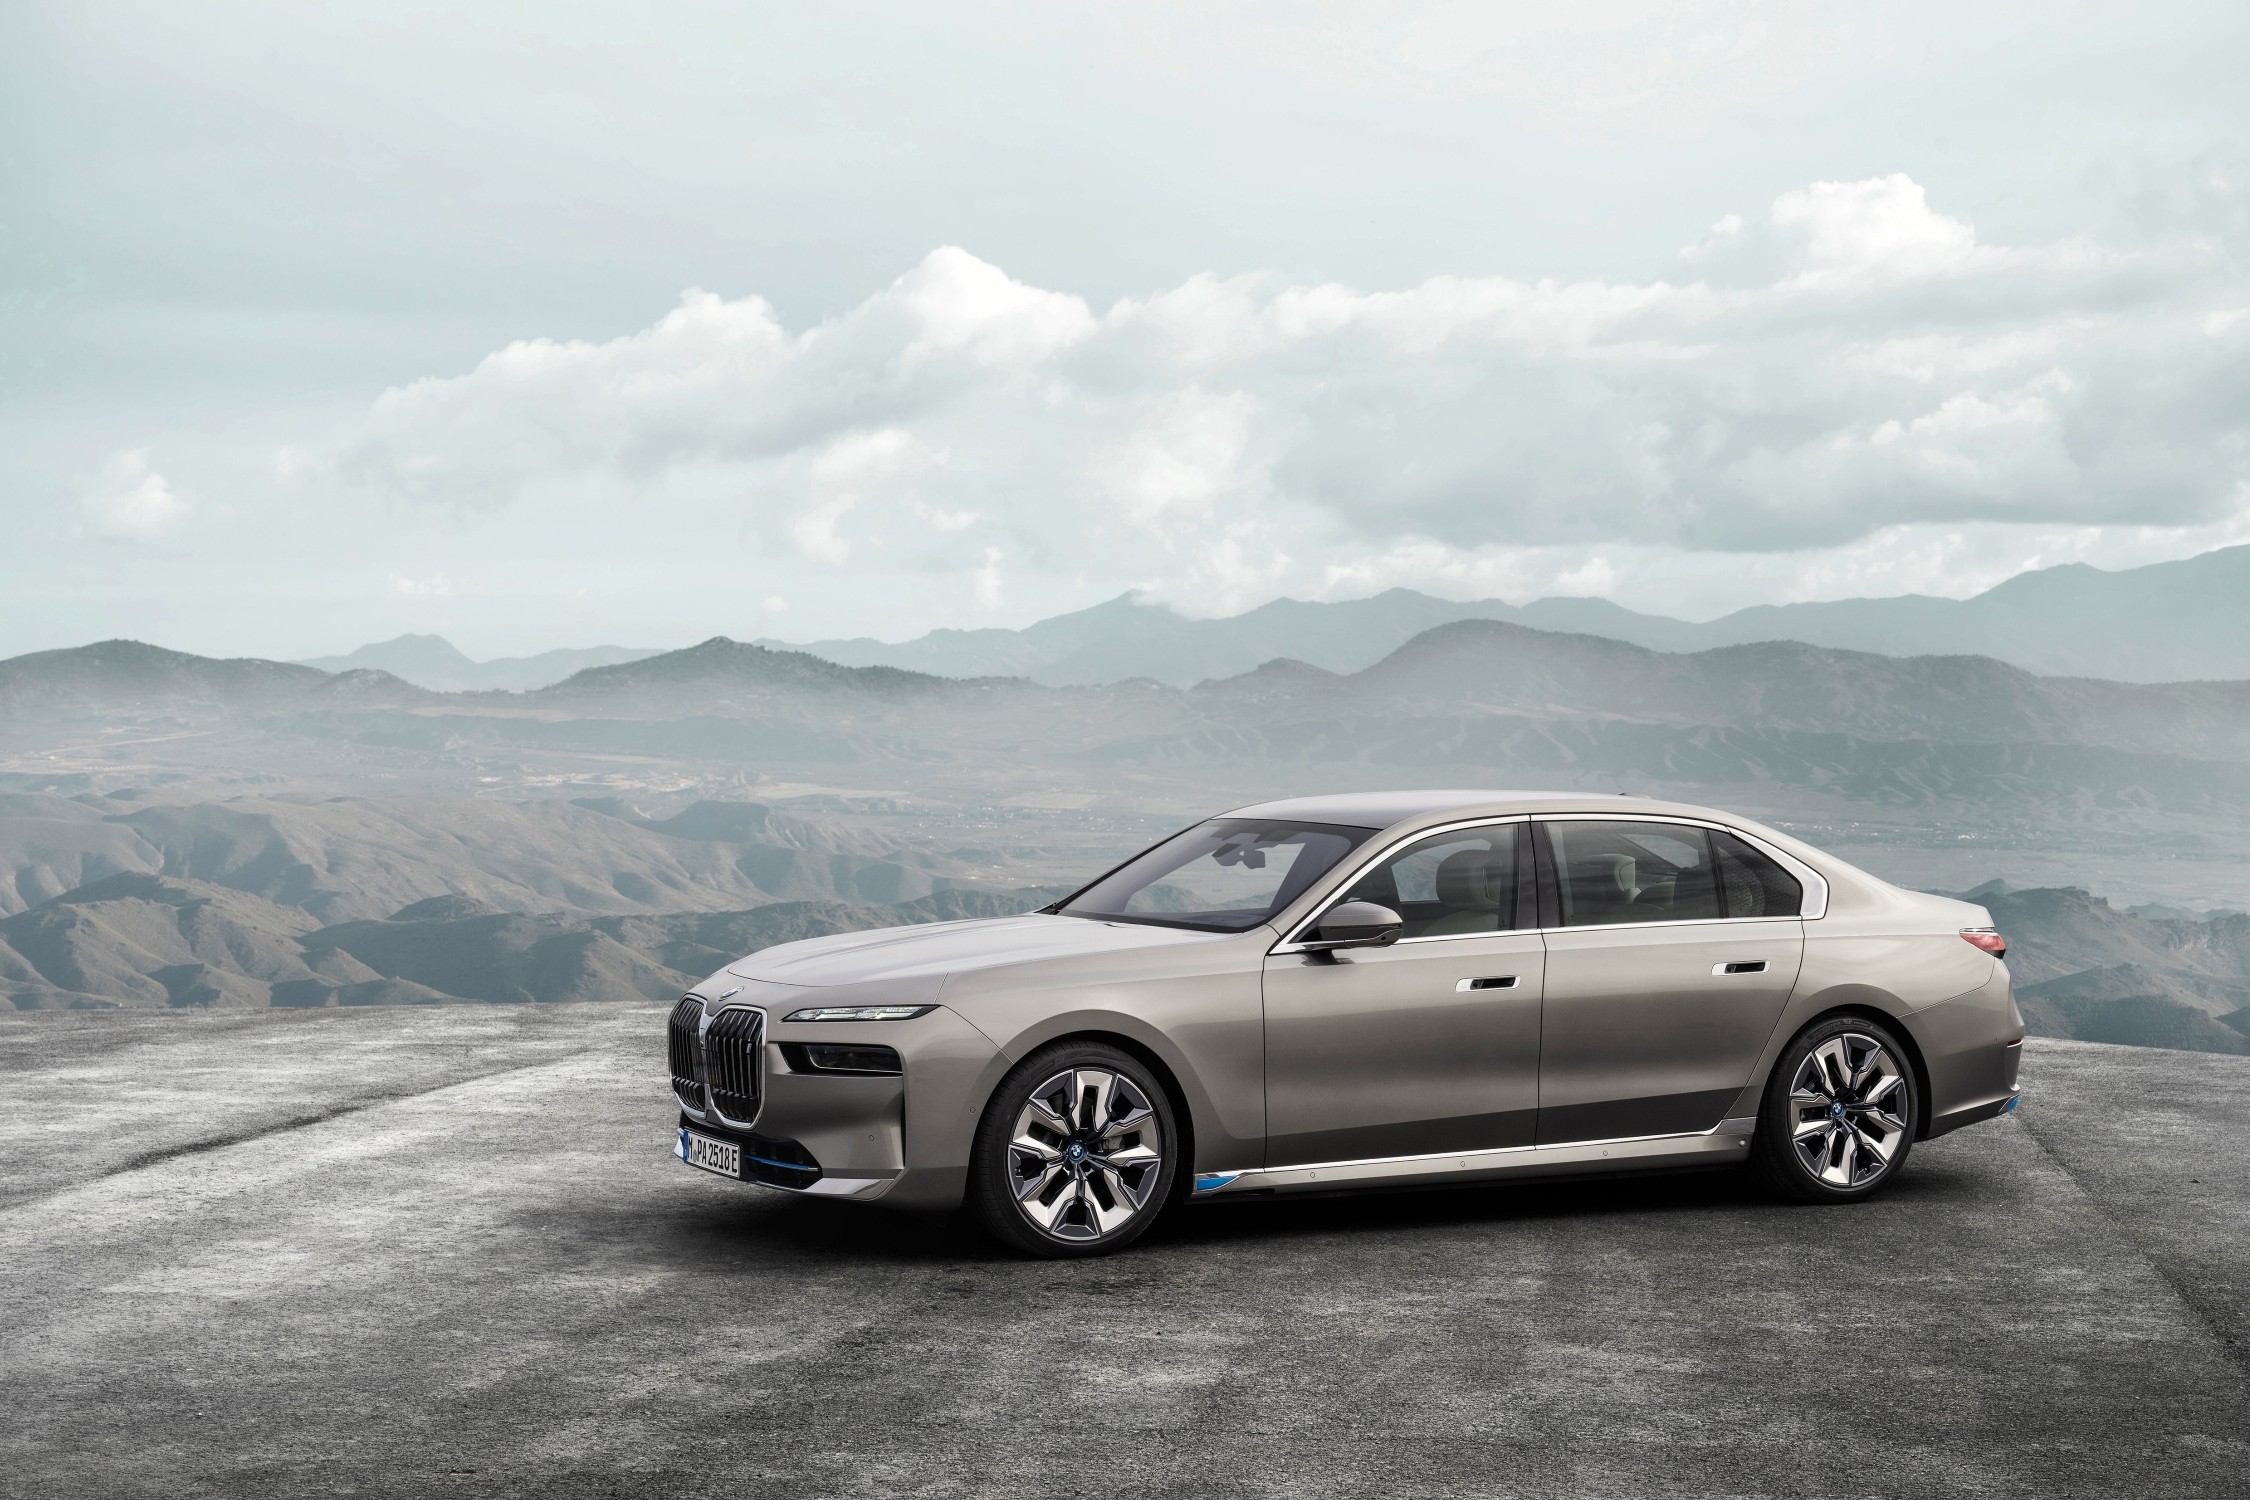 Presenta BMW nuevo Serie 7 totalmente renovado